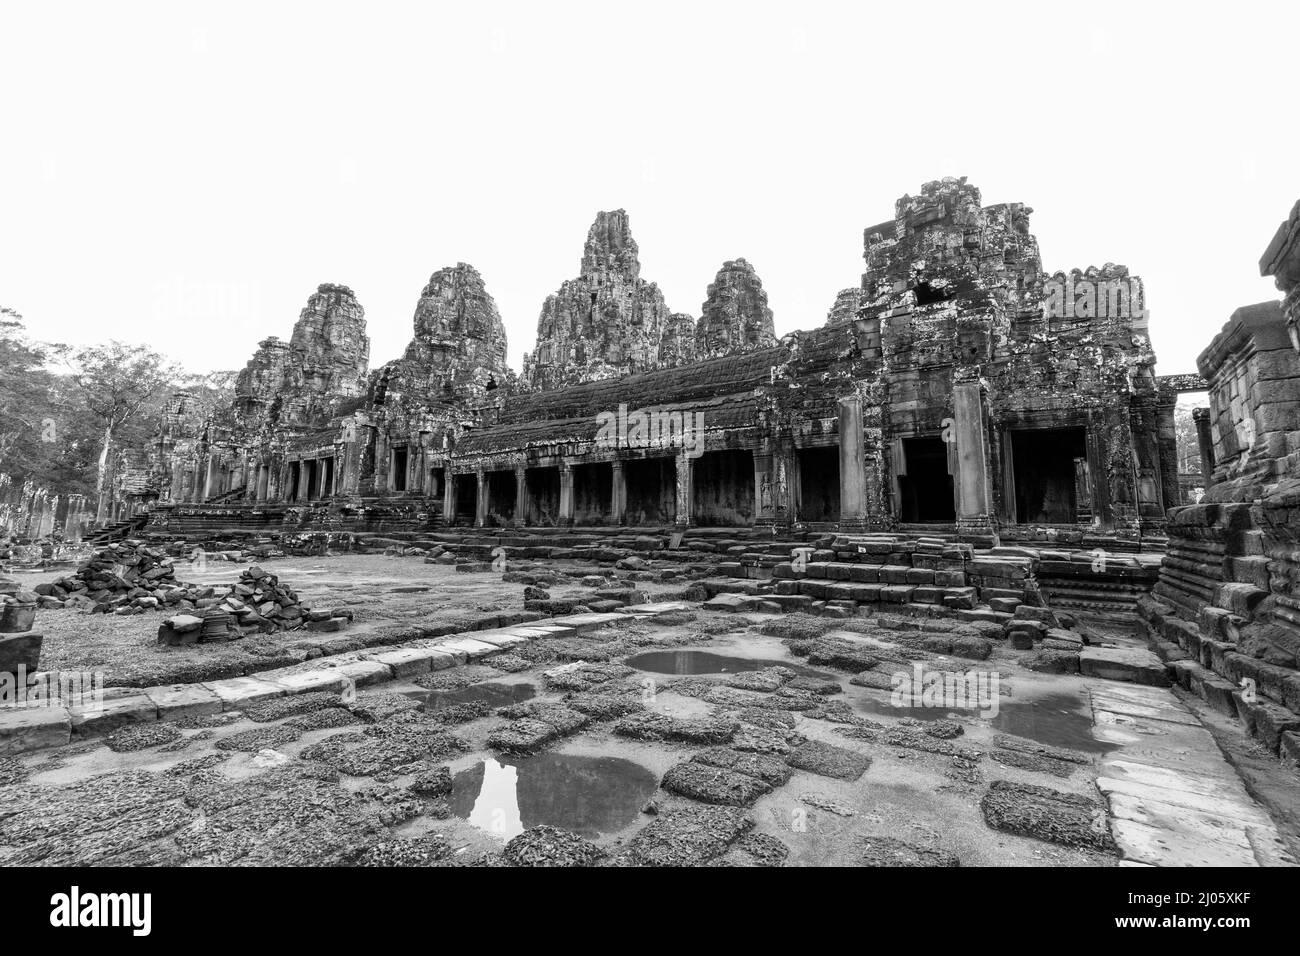 Geschnitzte Stupa's in Bayon, Angkor Thom, Siem Reap, Kambodscha. Stockfoto